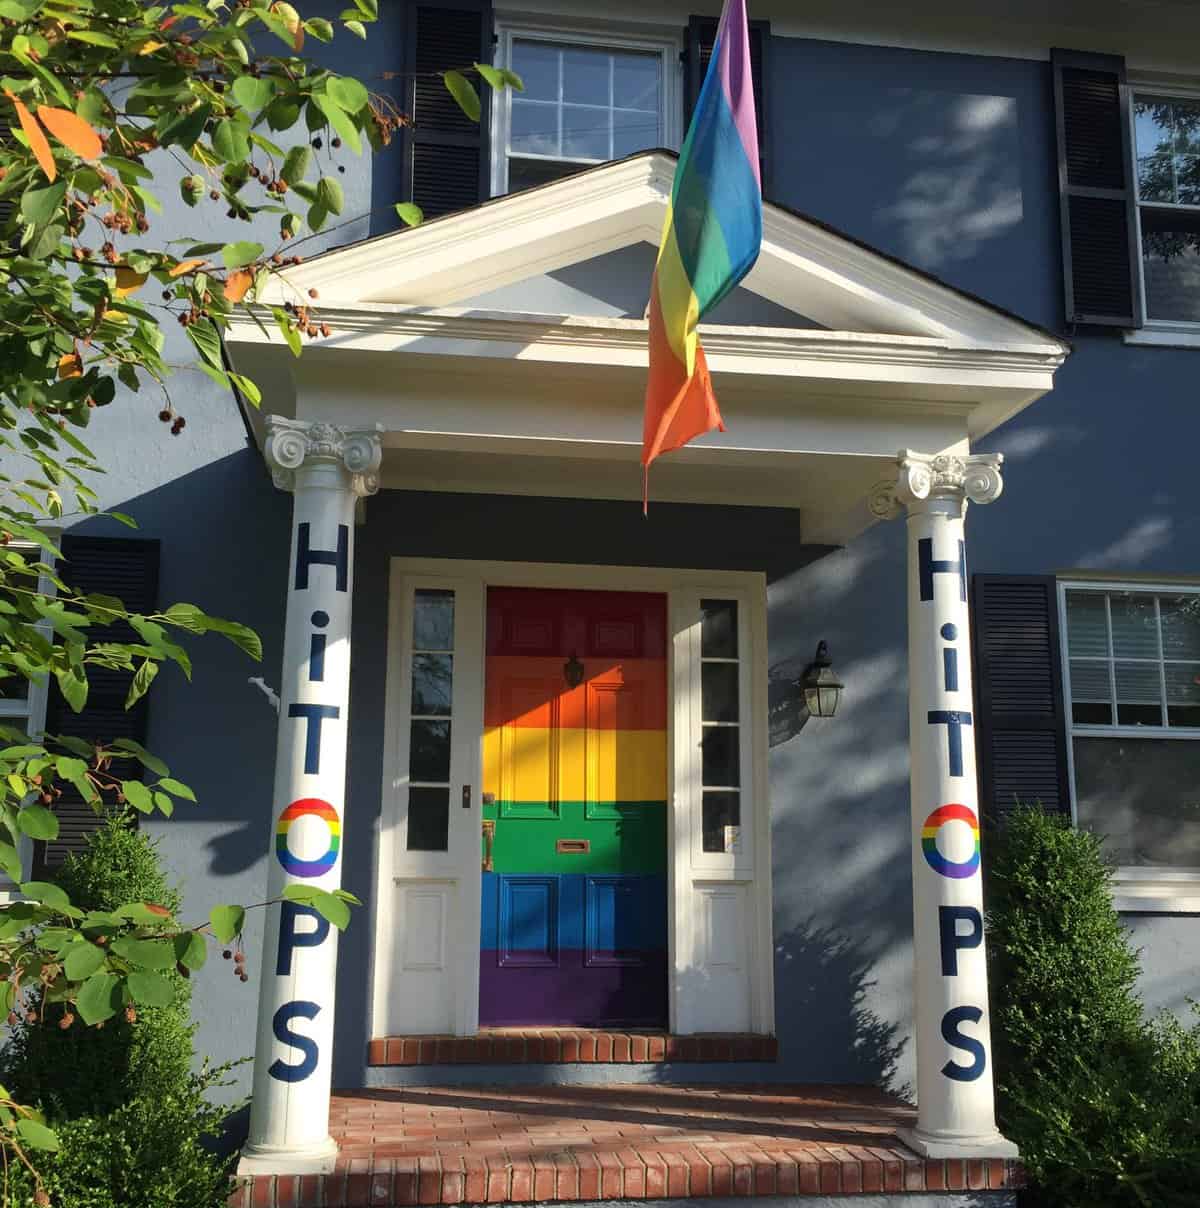 Local advocates applaud landmark Supreme Court ruling on LGBTQ rights